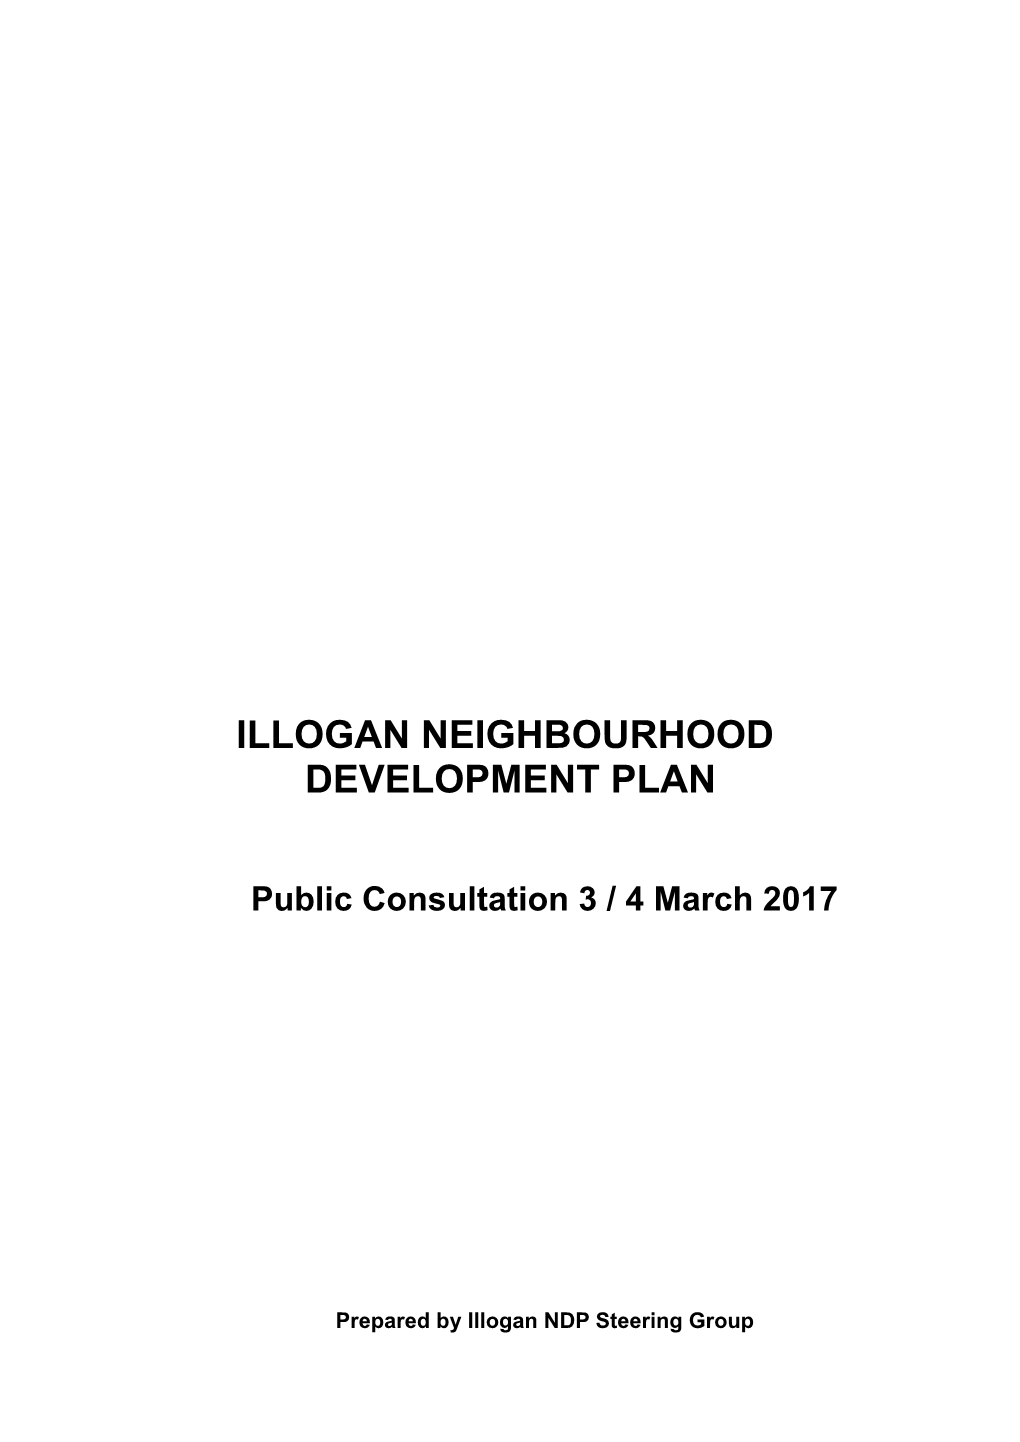 Illogan Neighbourhood Development Plan